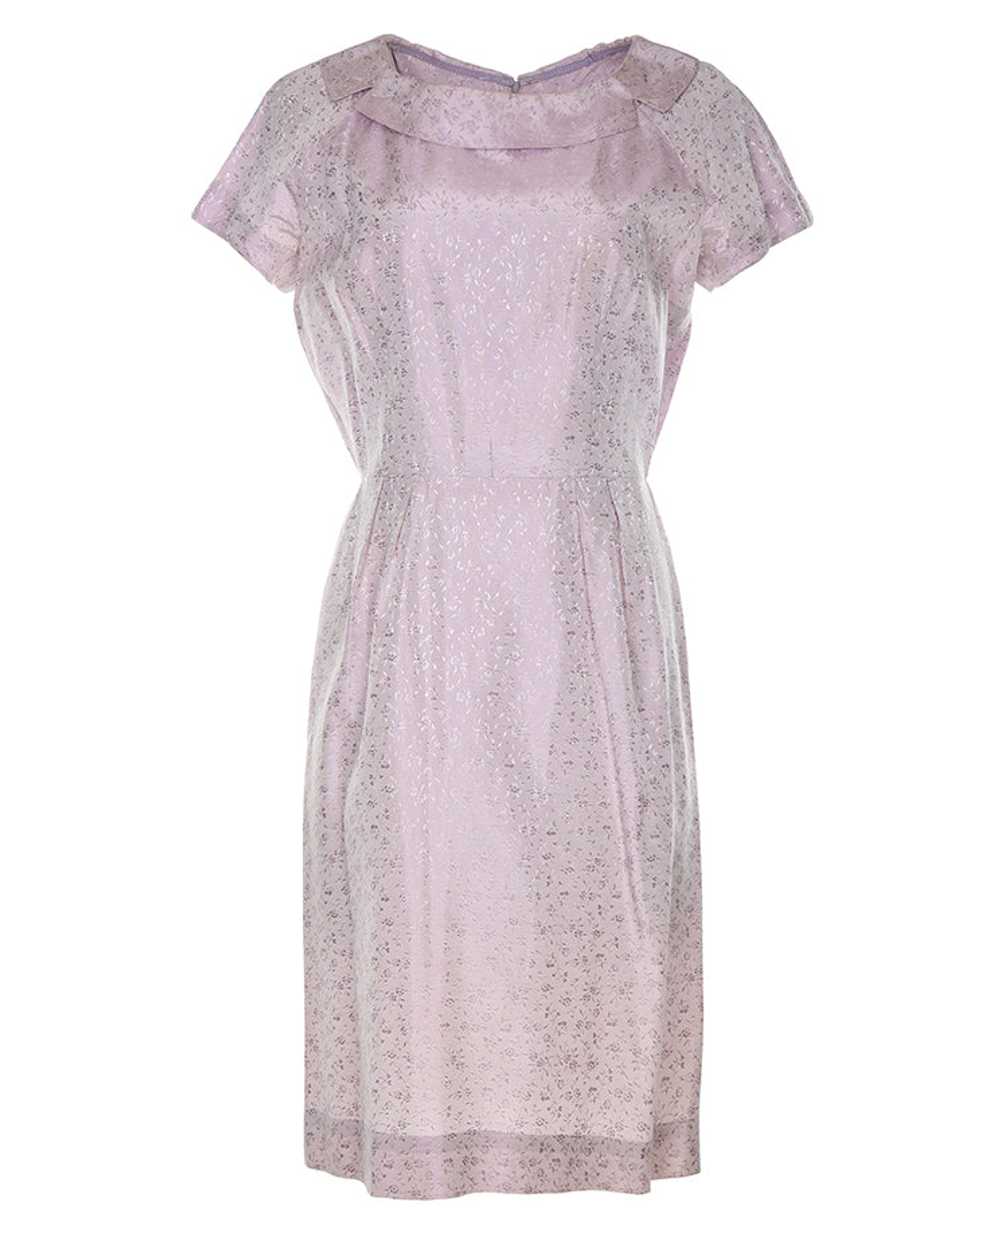 50s 60s Lavender Floral Dress - S - image 1